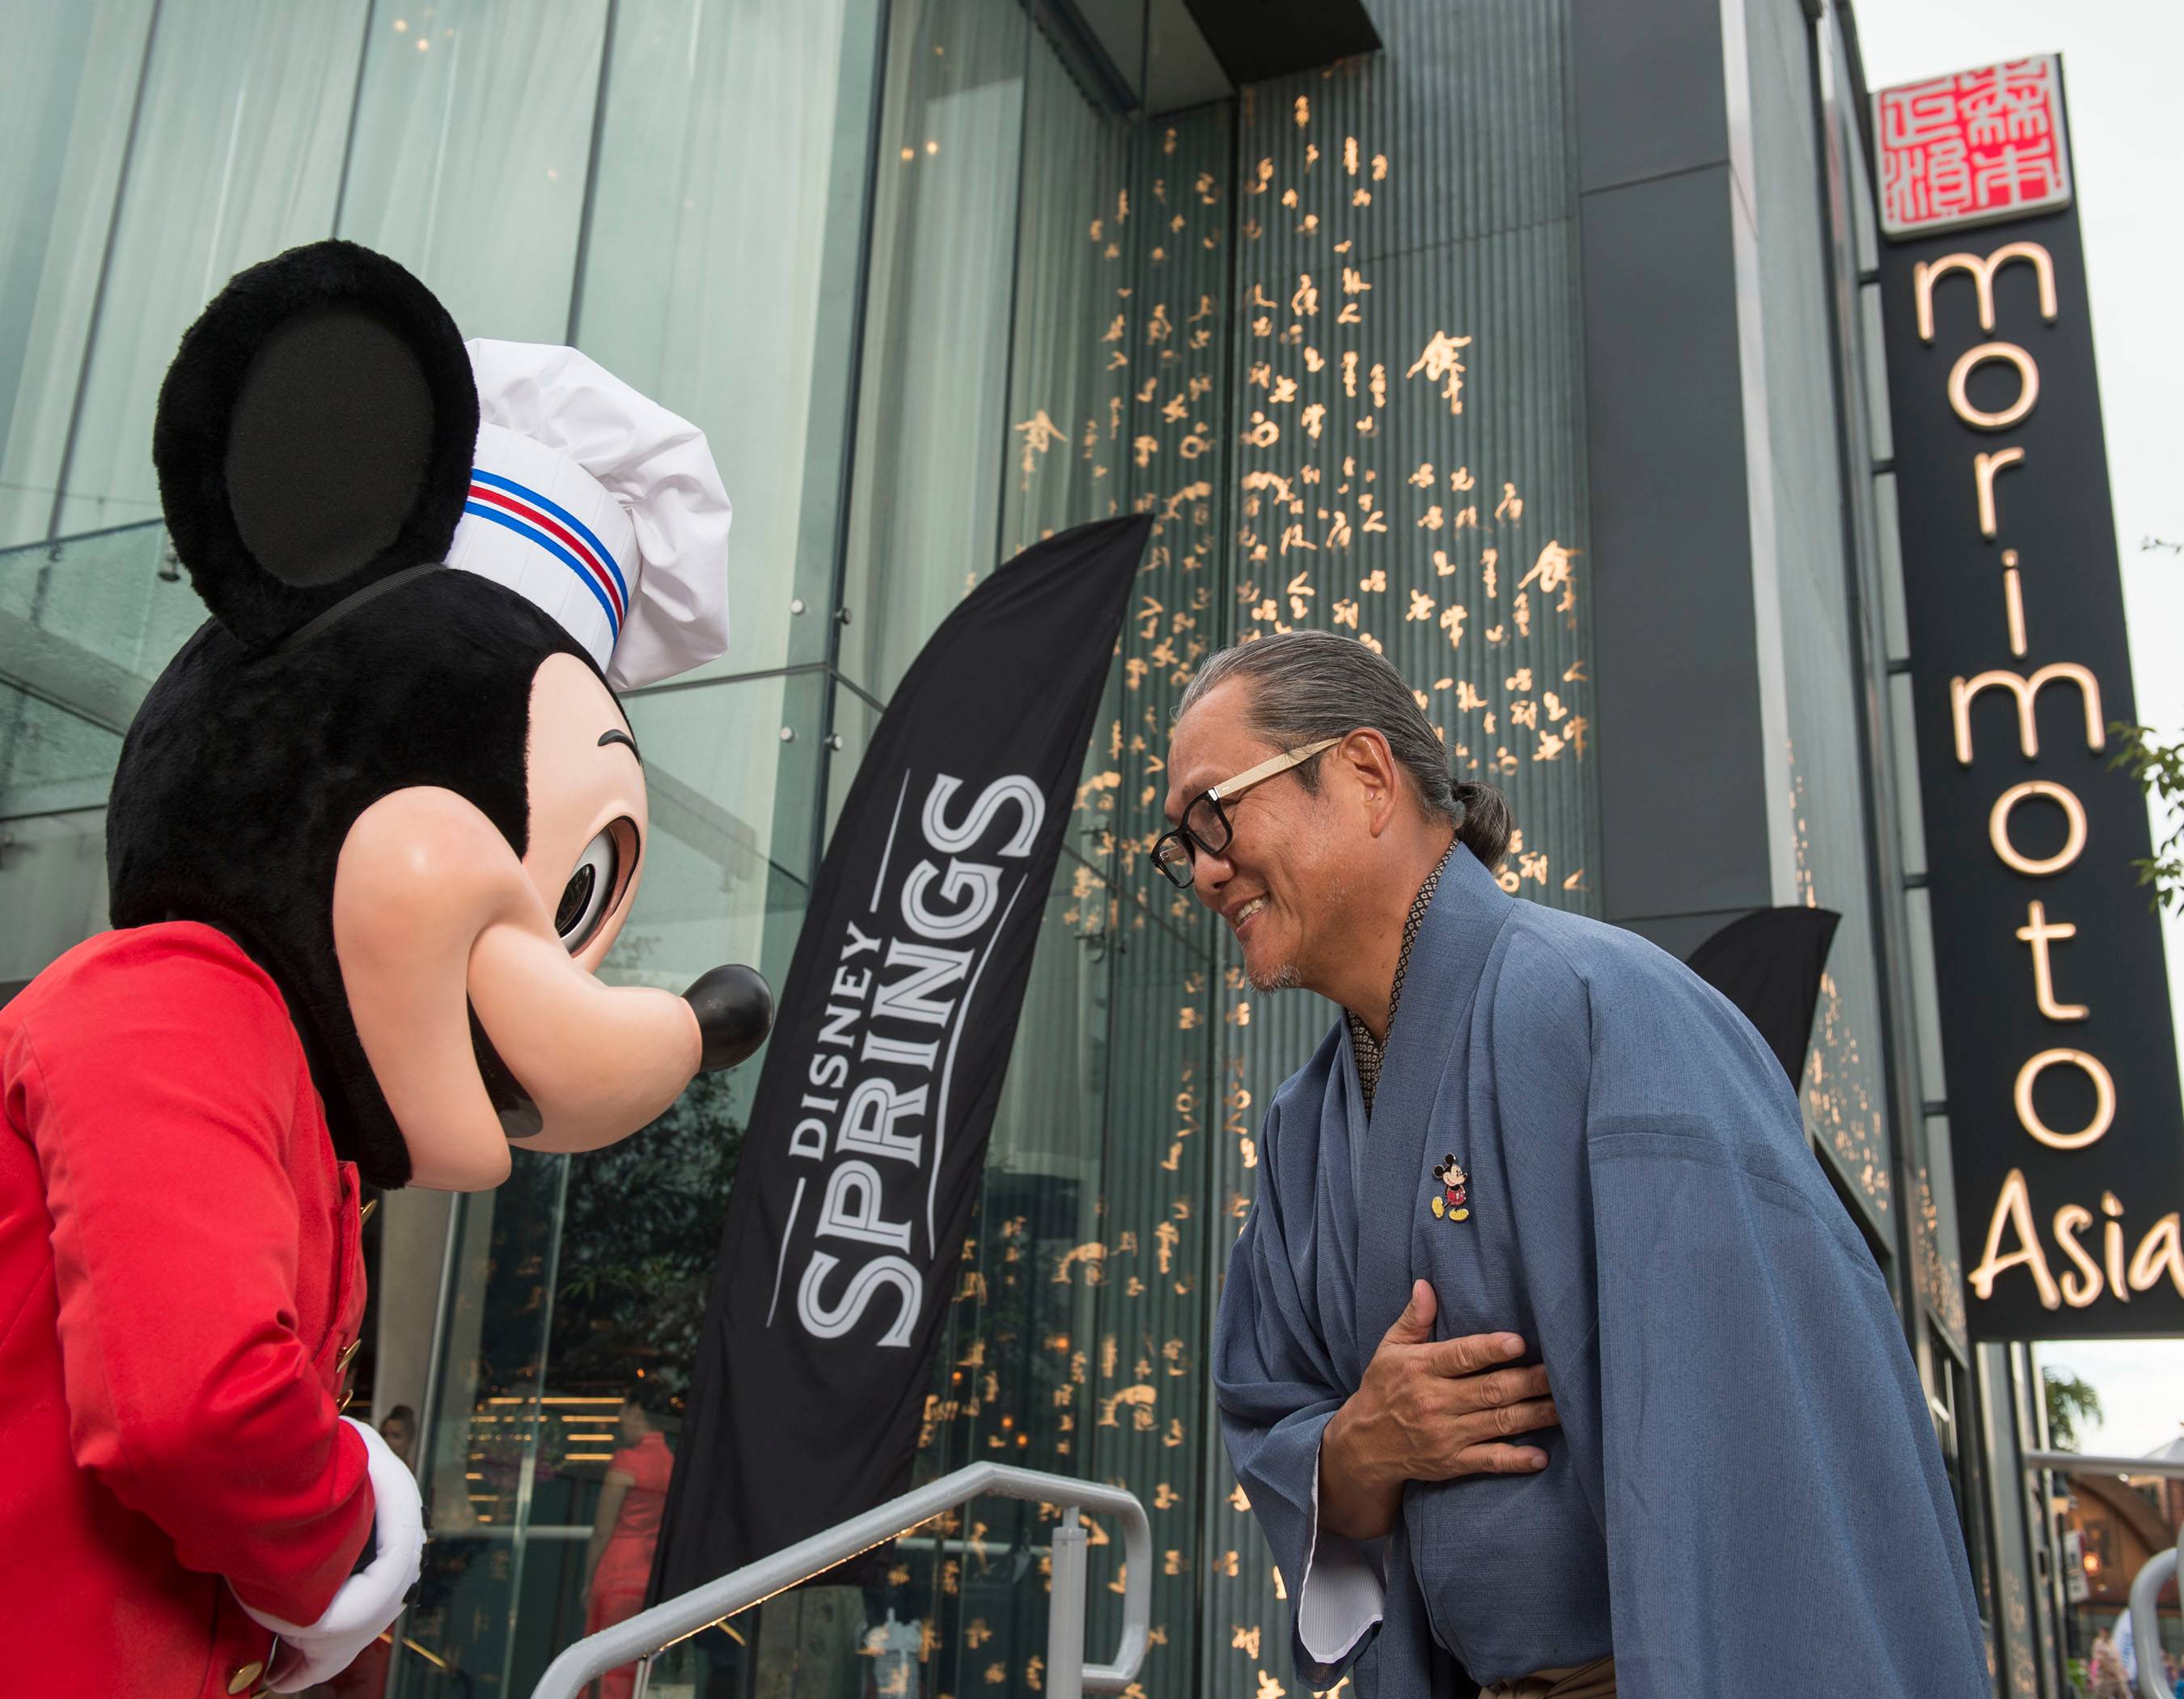 Iron Chef Morimoto and Mickey Mouse